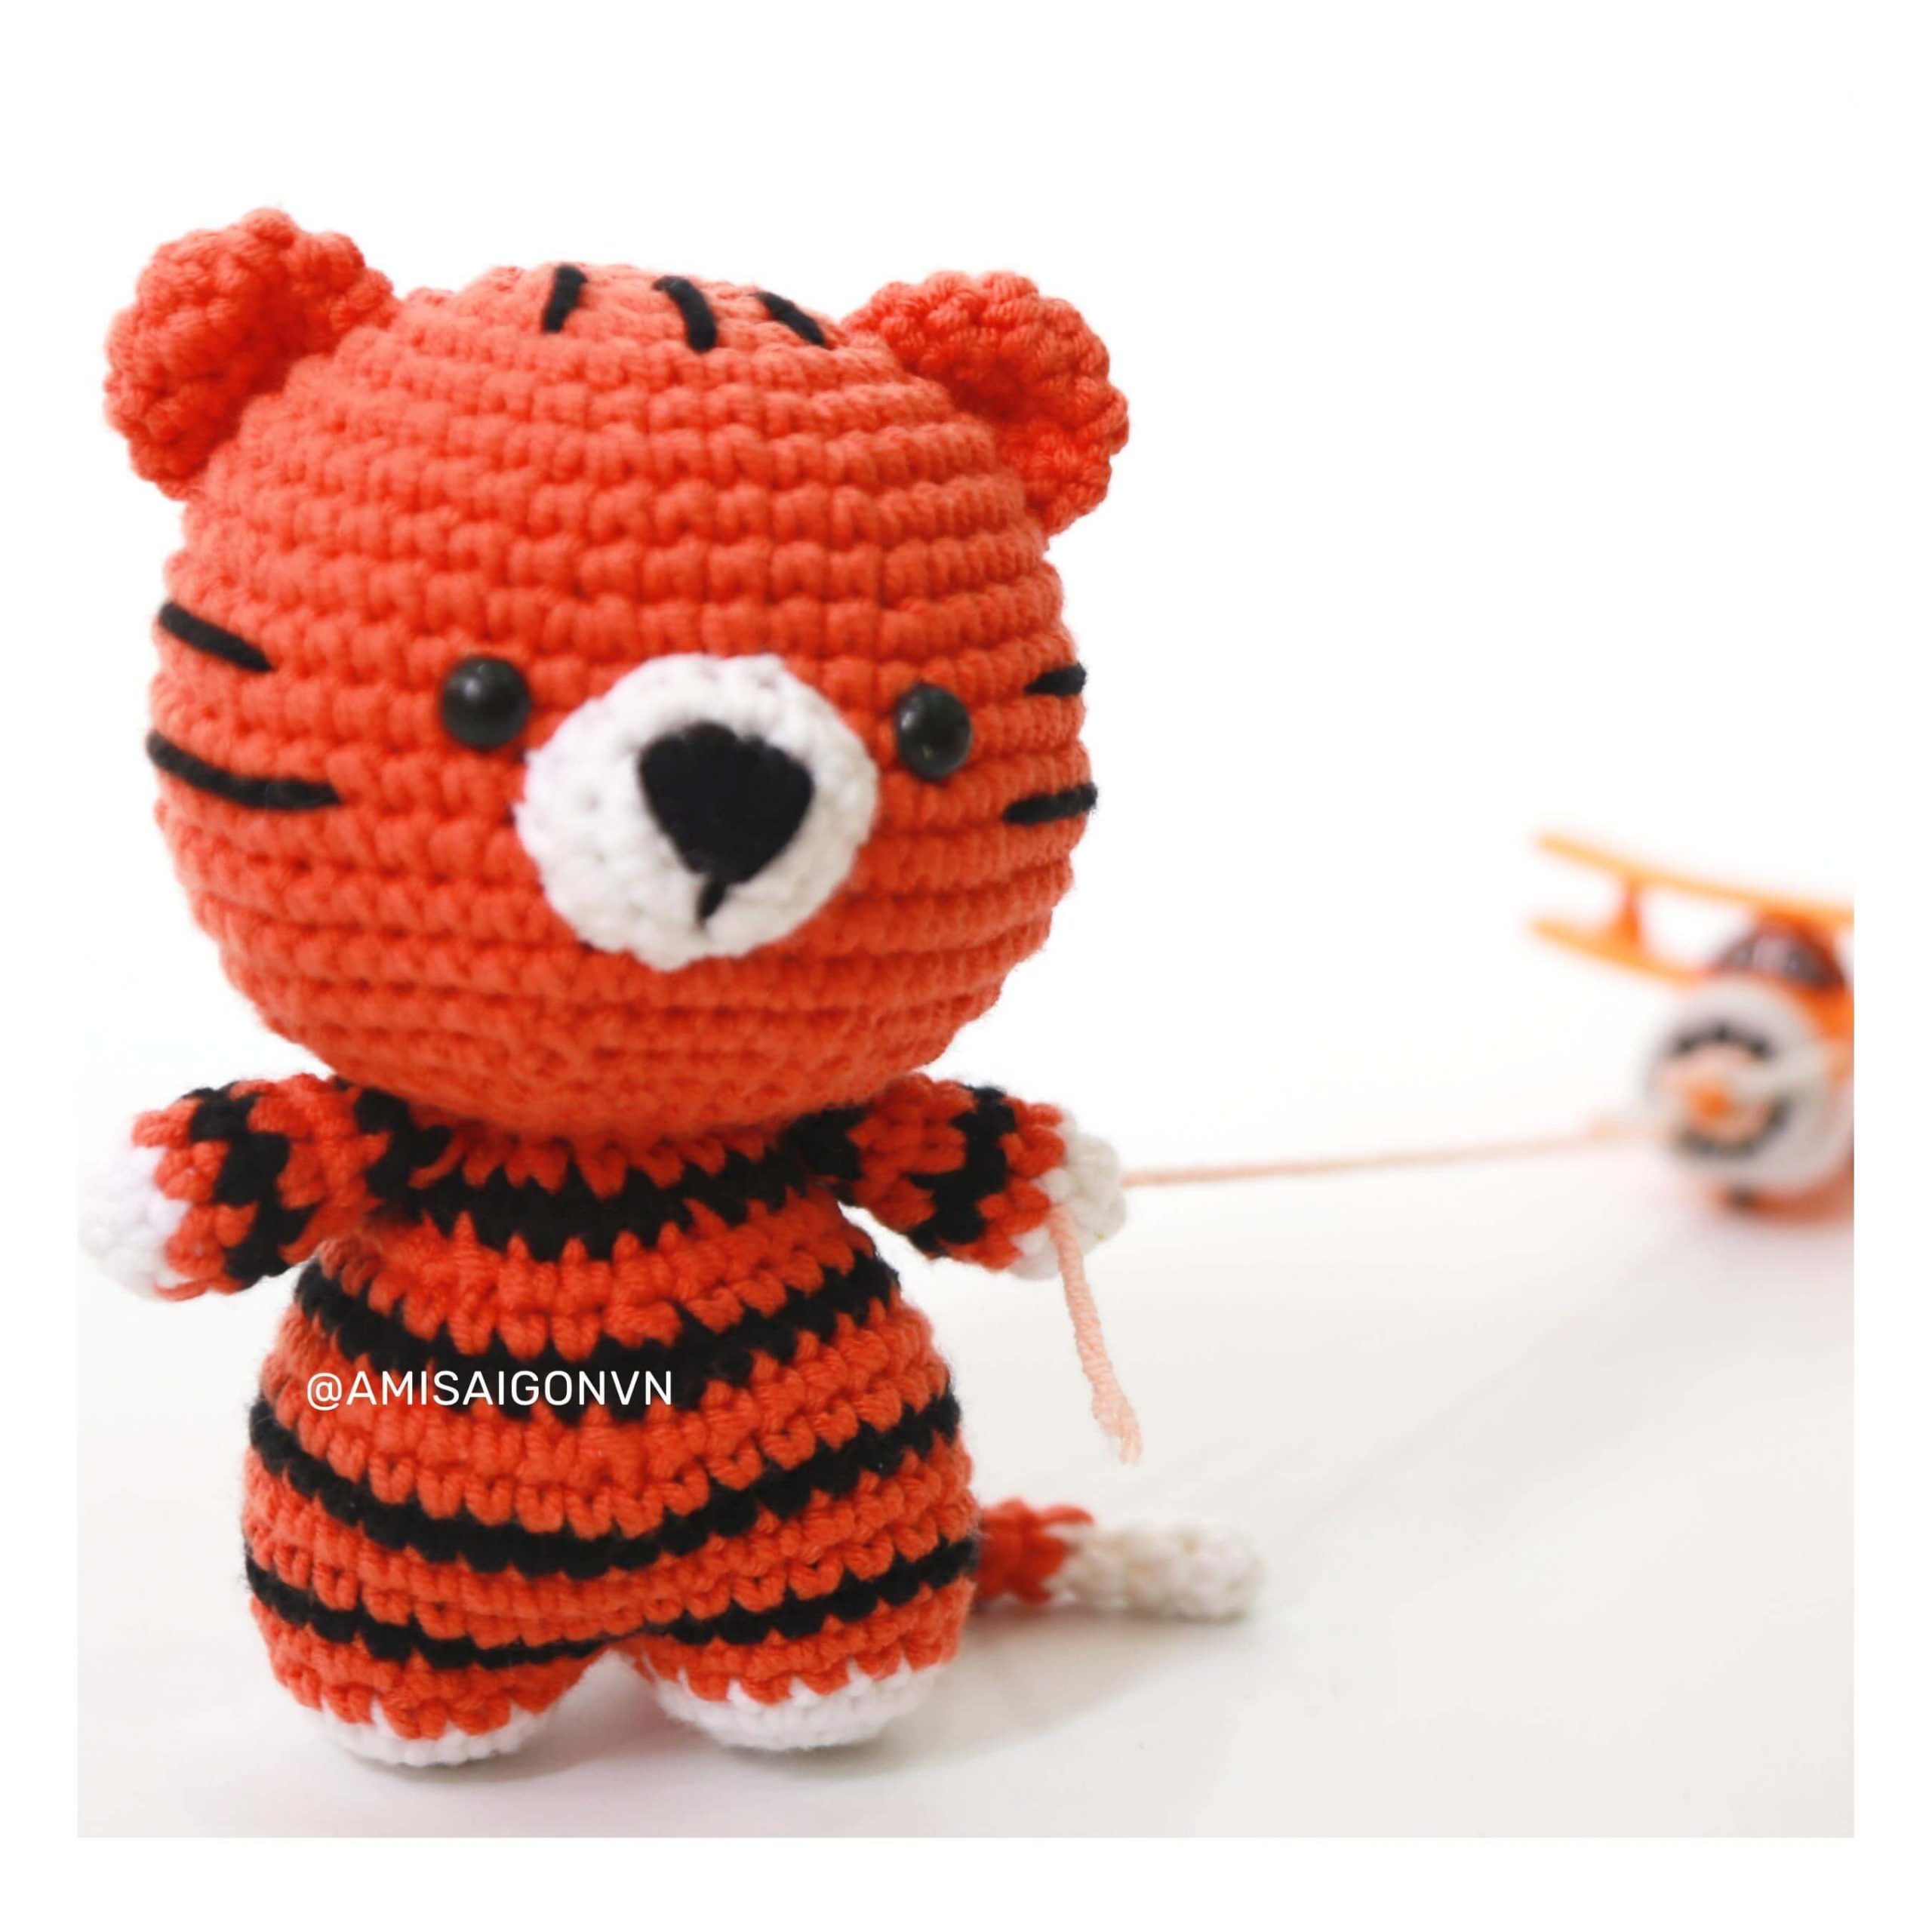 Tiger Amigurumi crochet pattern by AmiSaigon